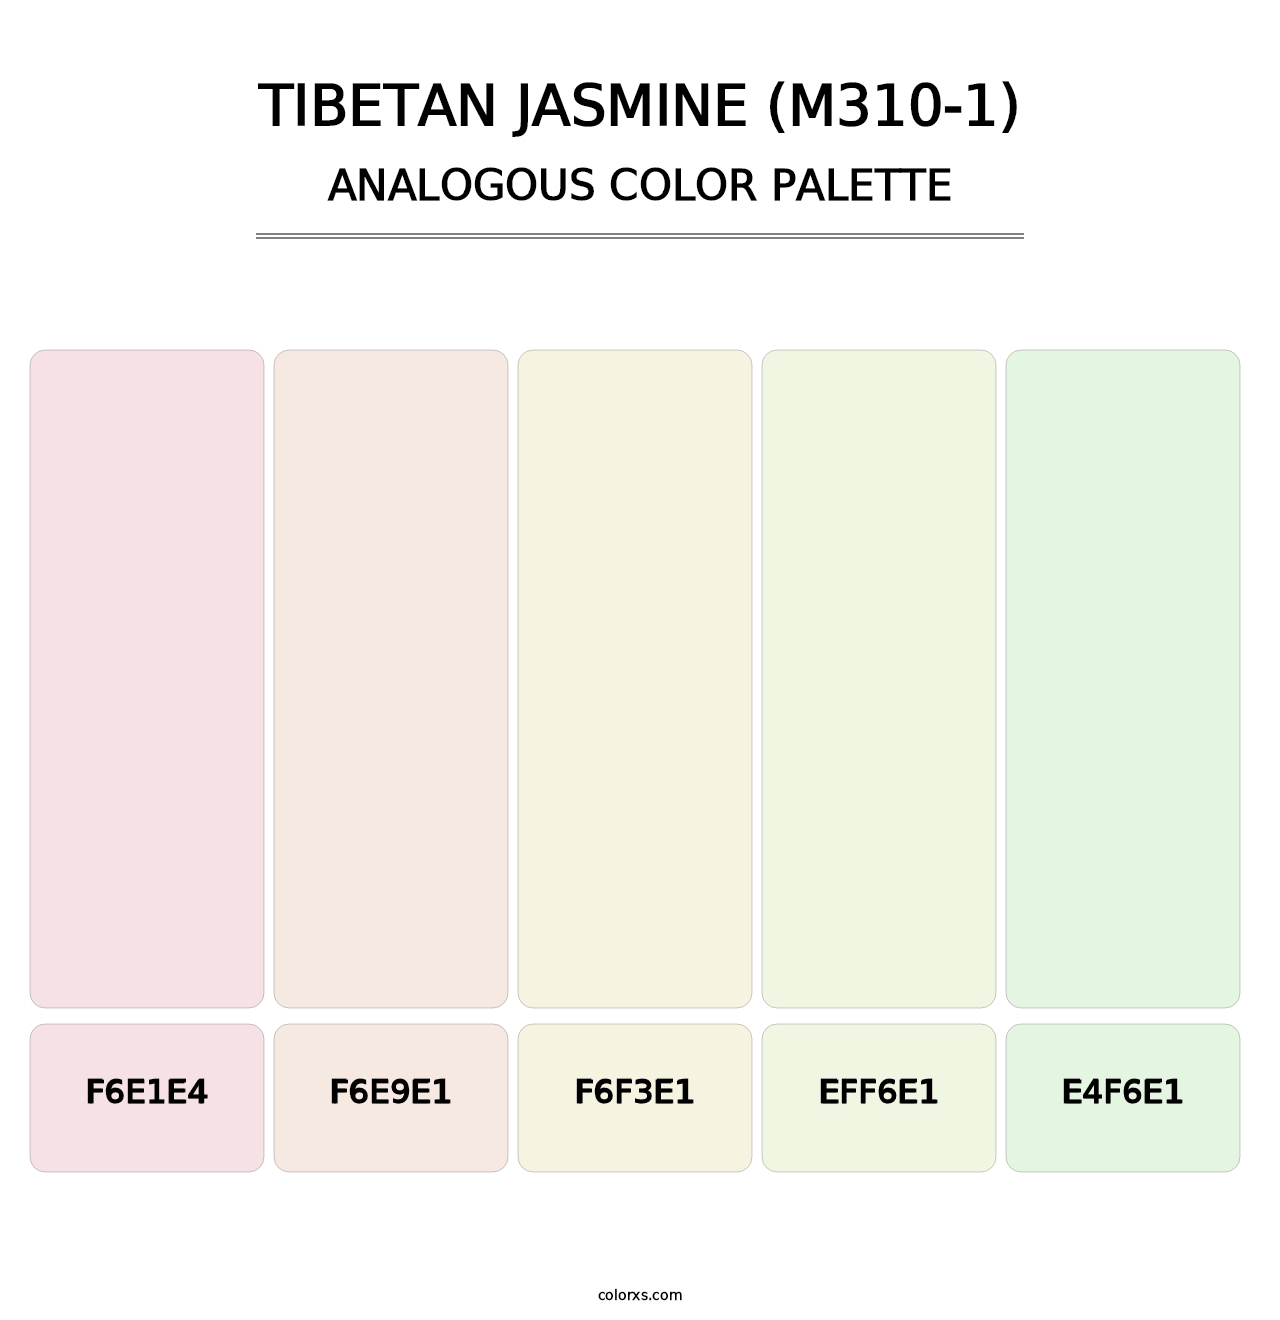 Tibetan Jasmine (M310-1) - Analogous Color Palette